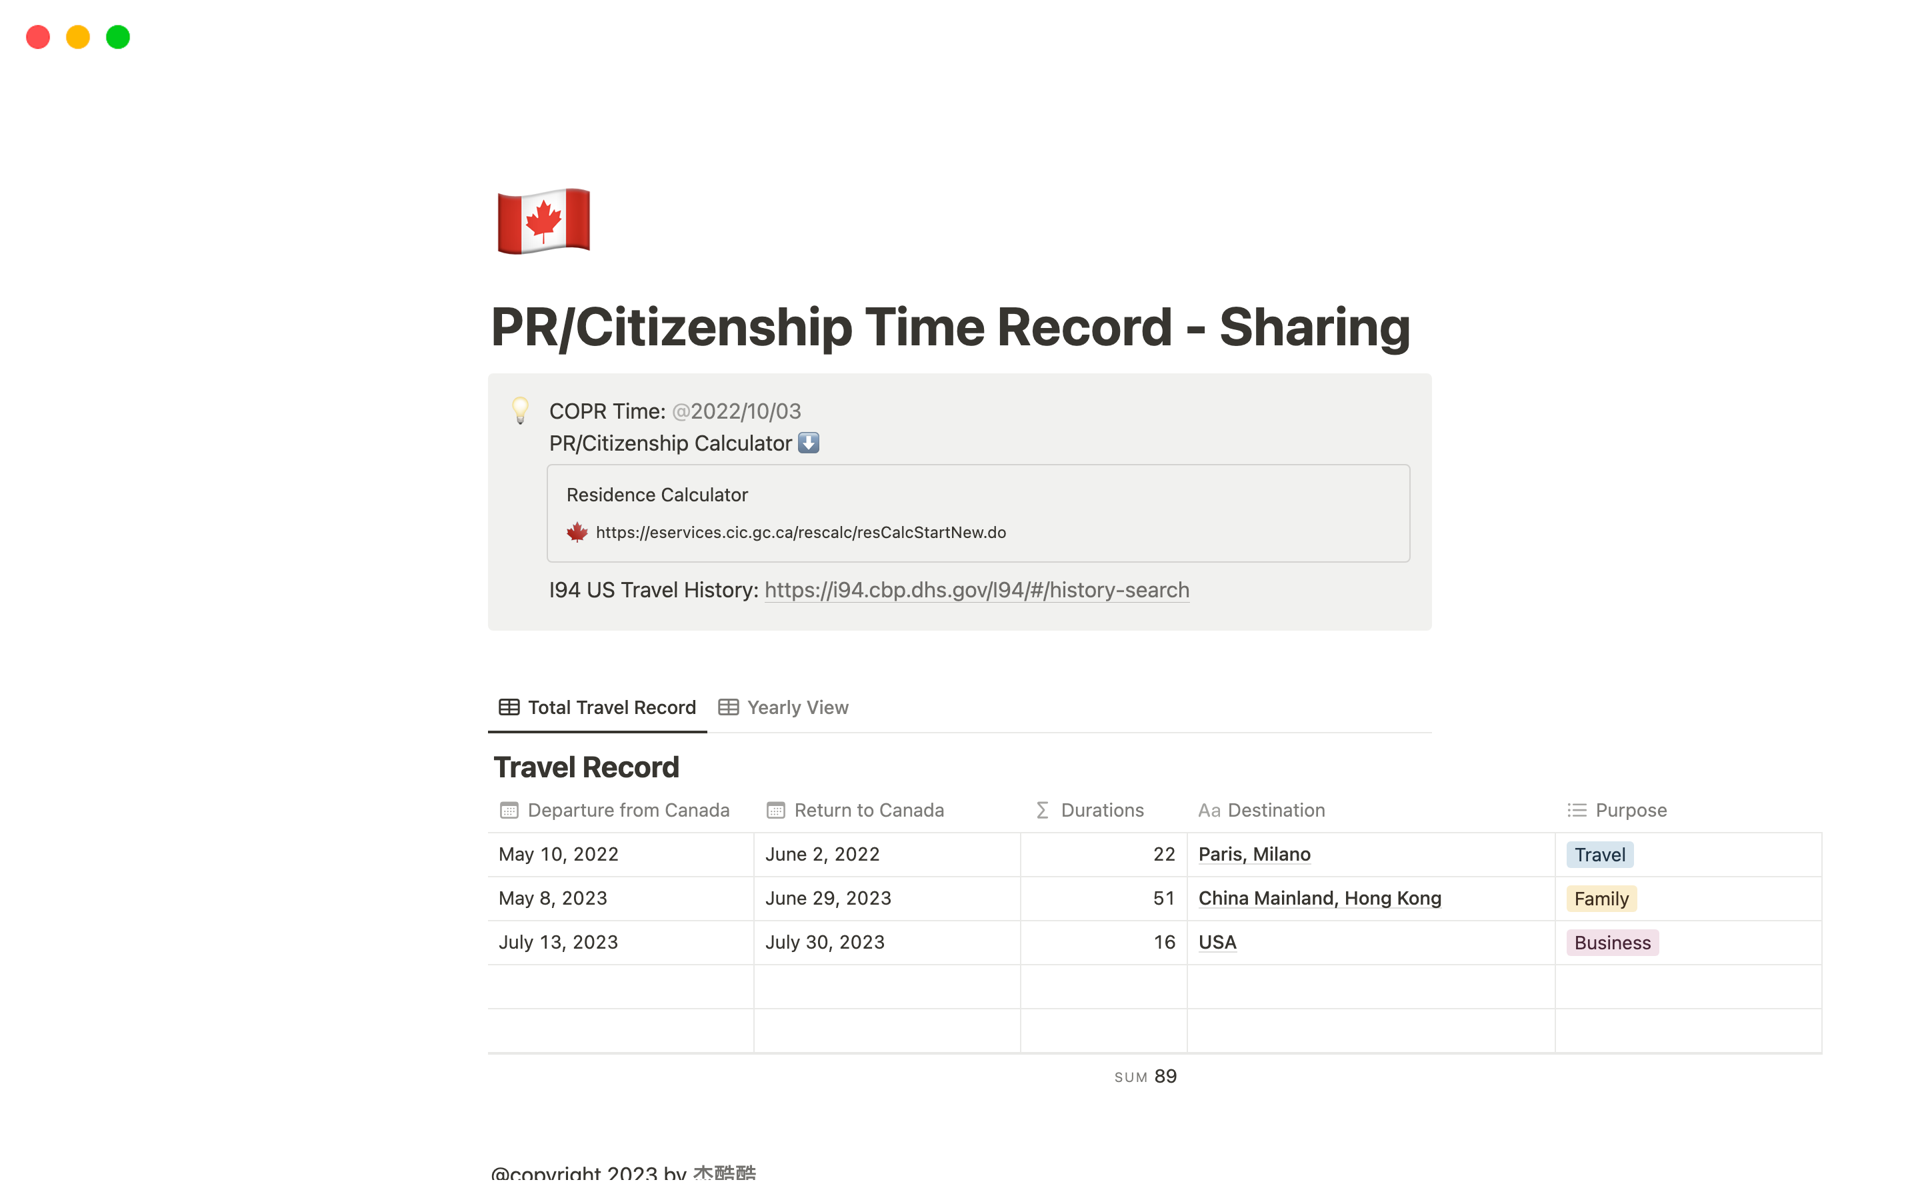 Vista previa de una plantilla para Canadian PR/Citizenship Time Record